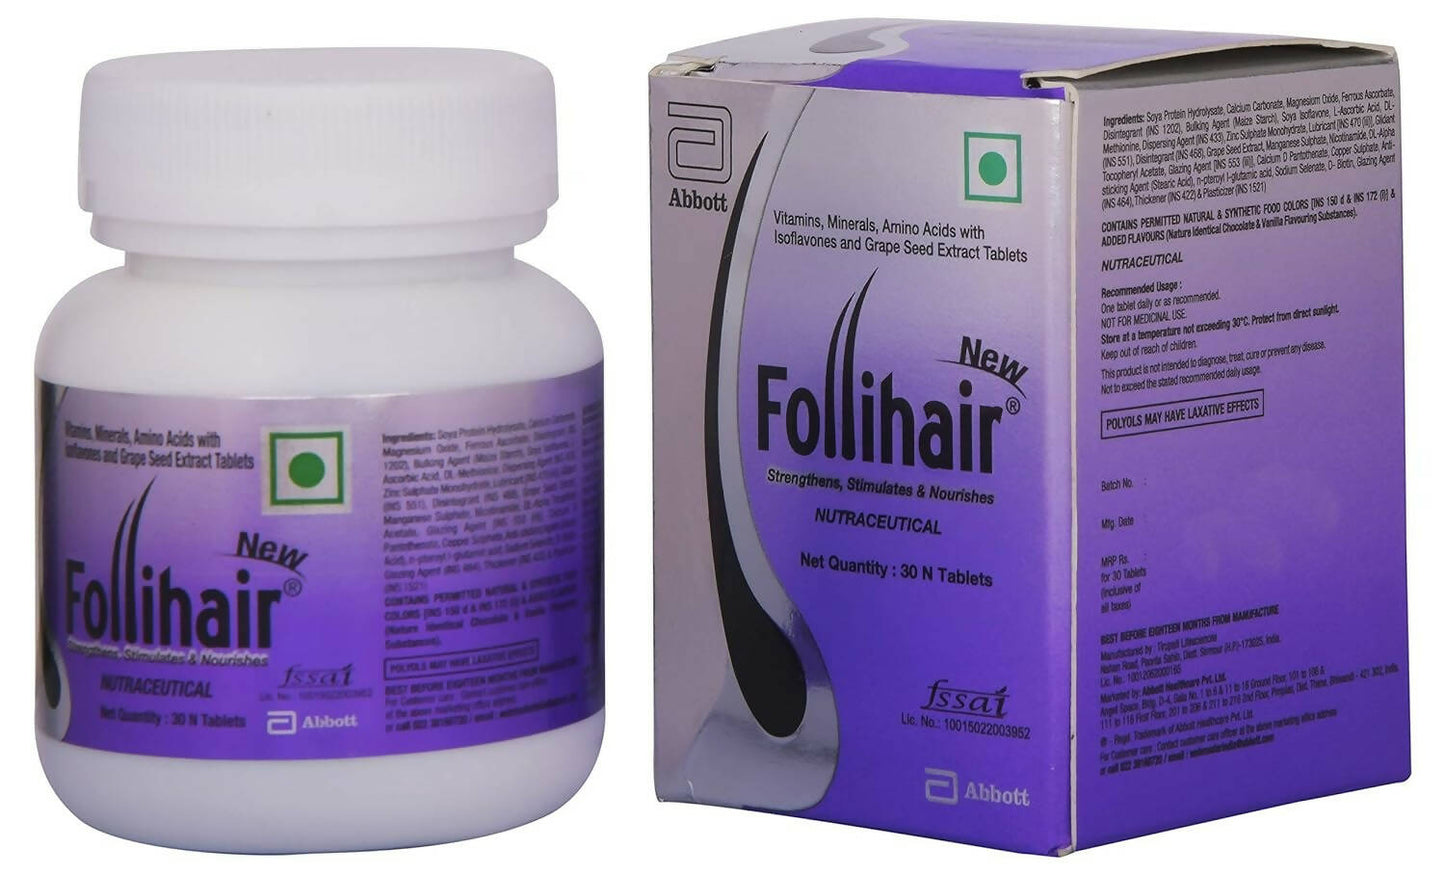 Abbott New Follihair Nutraceutical Tablets